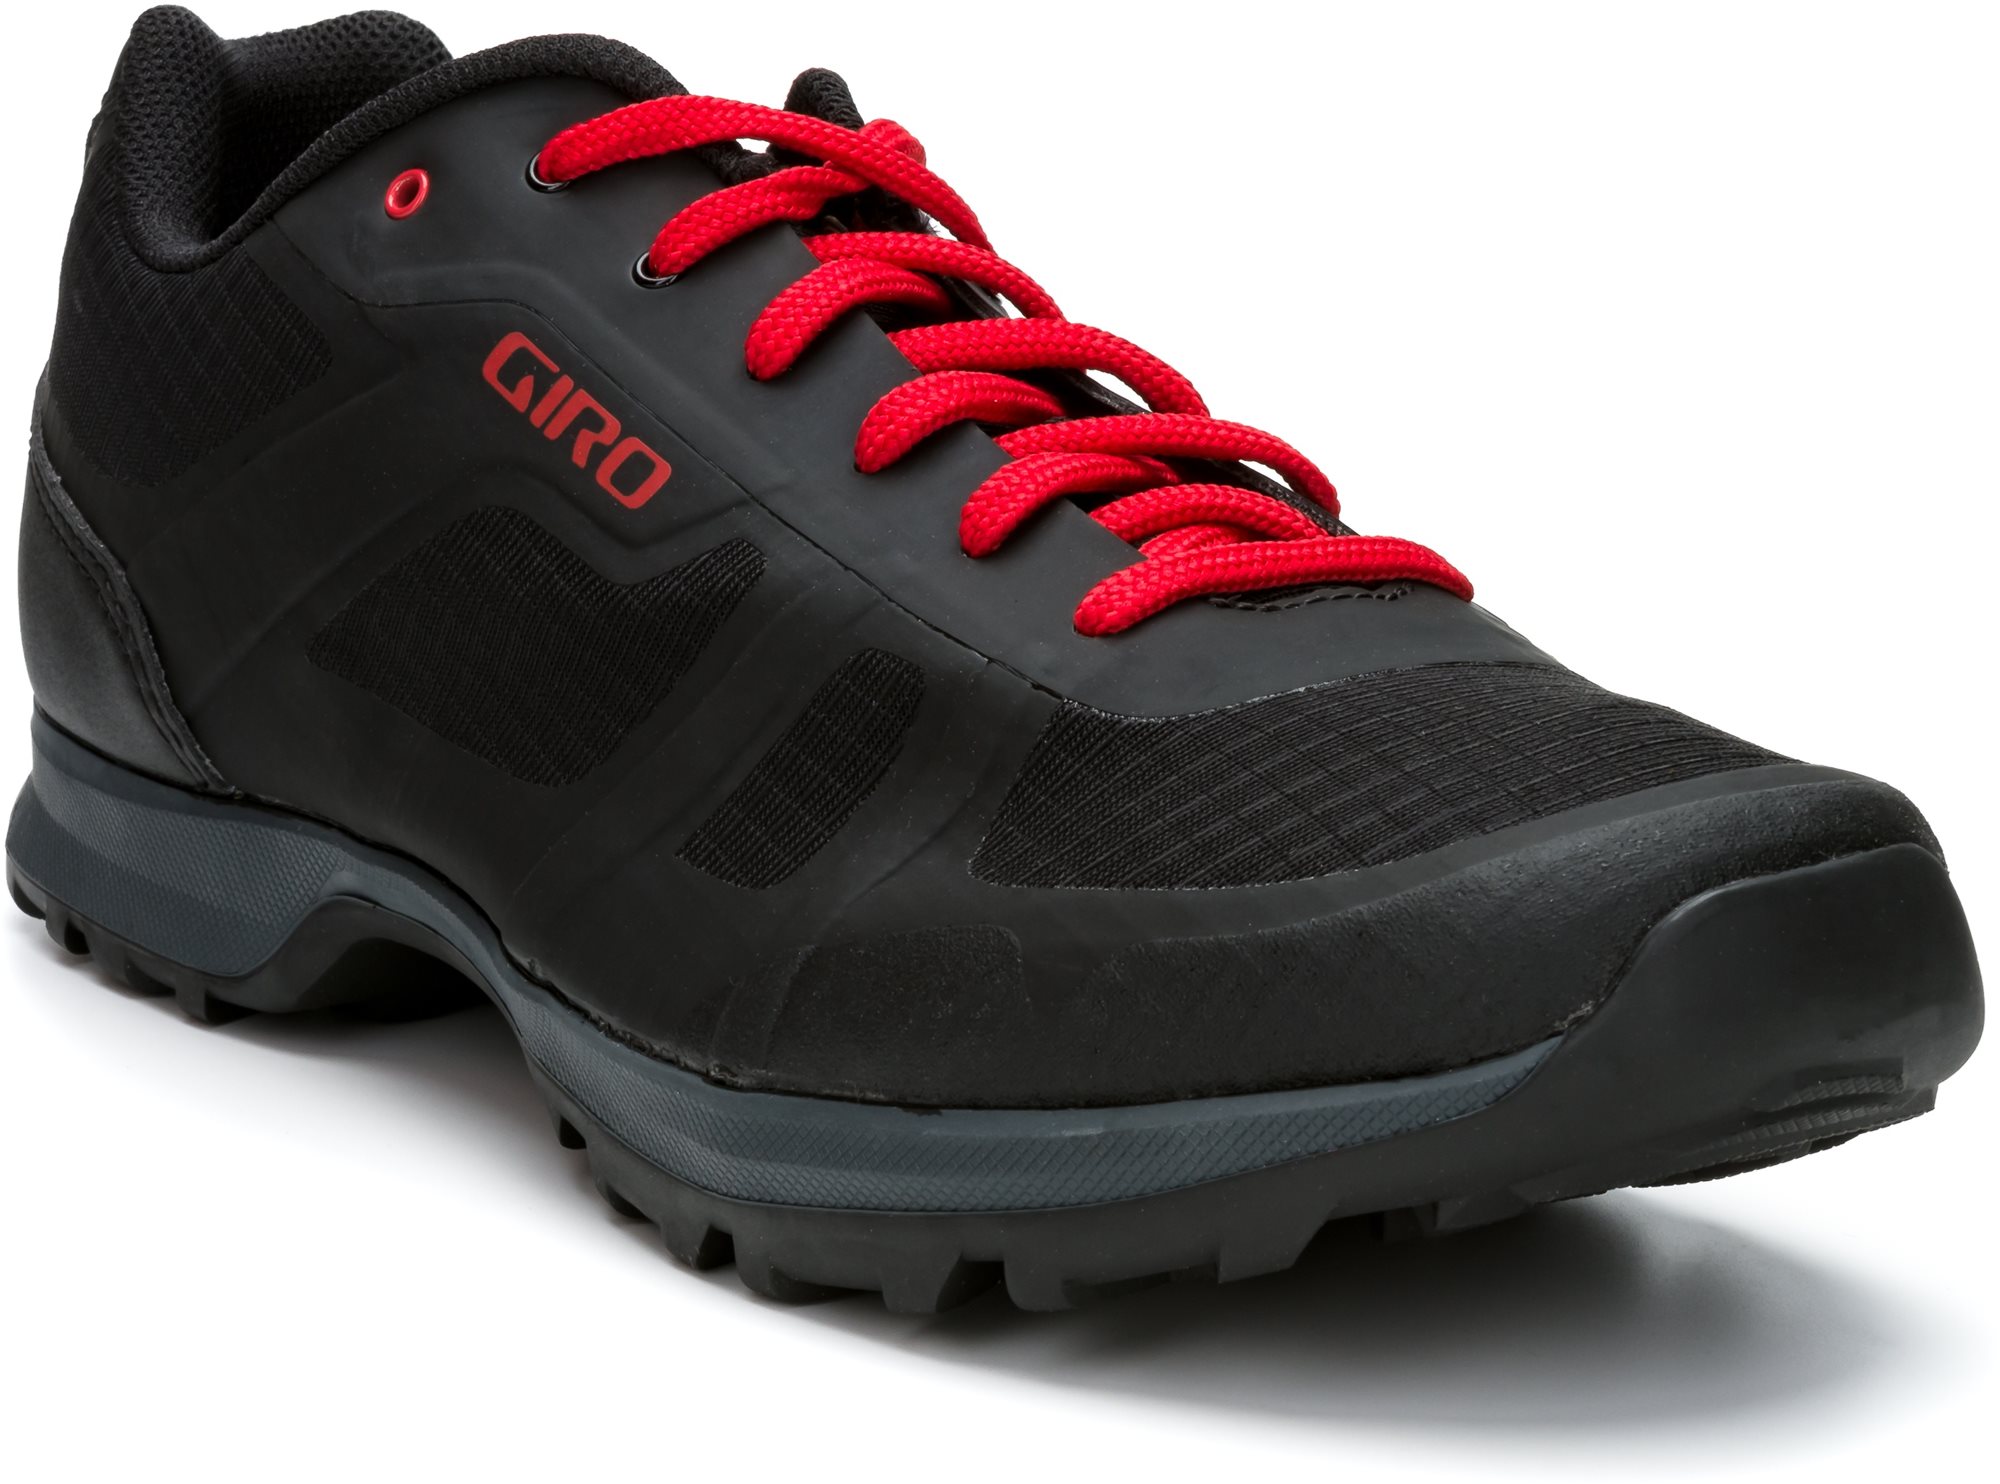 GIRO Gauge kerékpáros cipő, fekete/világos piros, 46-os